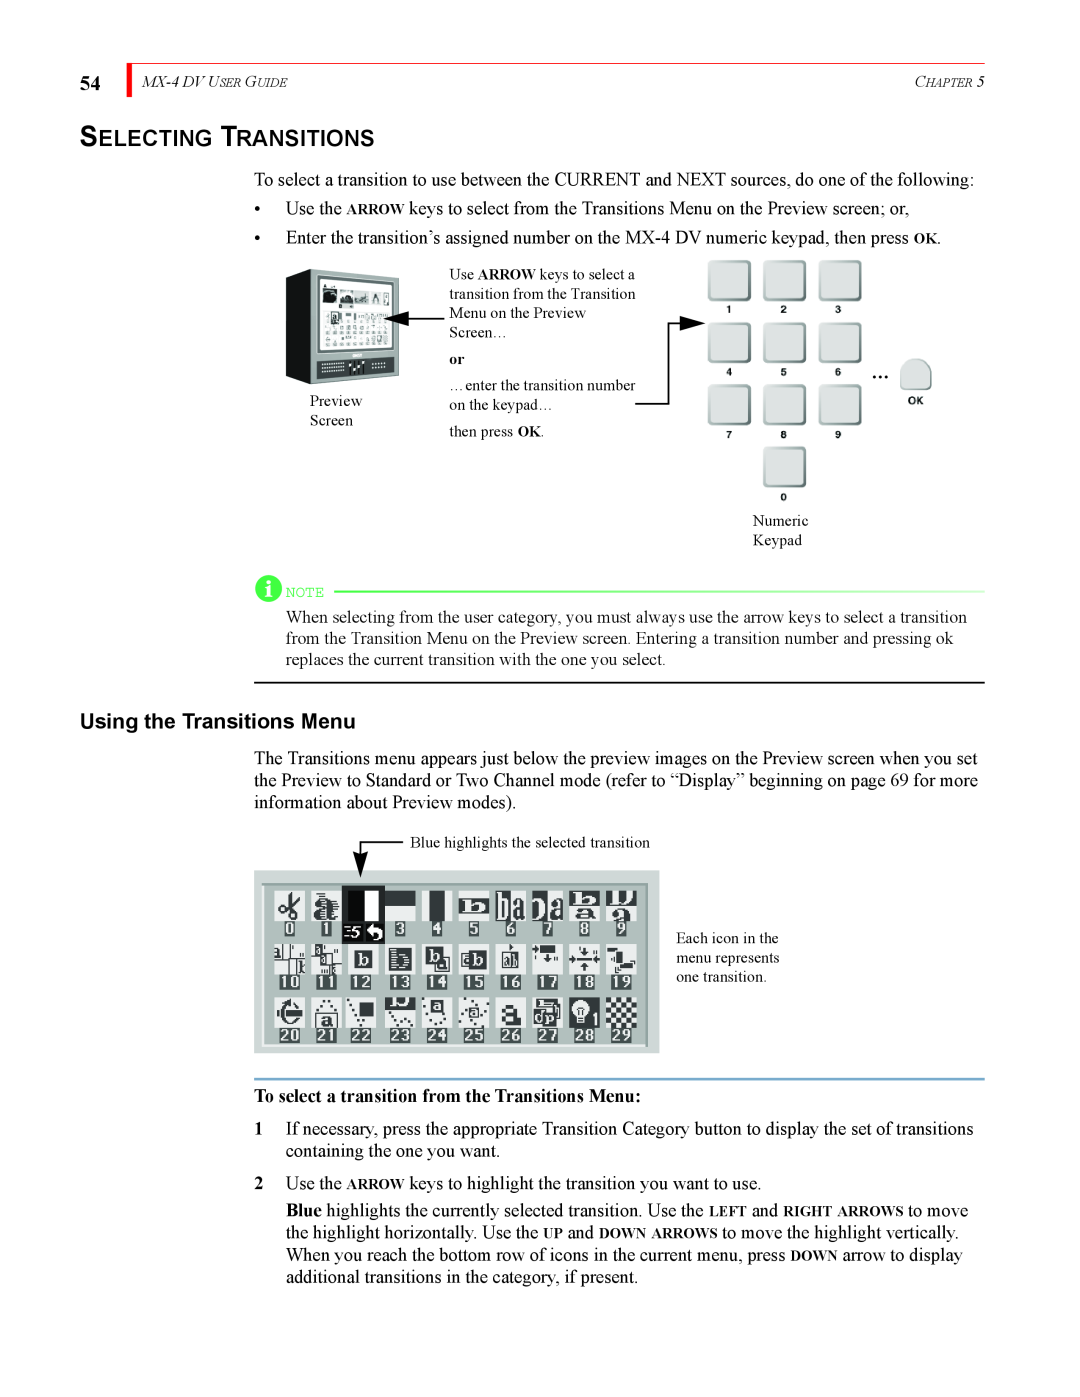 FOCUS Enhancements MX-4DV manual Selecting Transitions, Using the Transitions Menu 